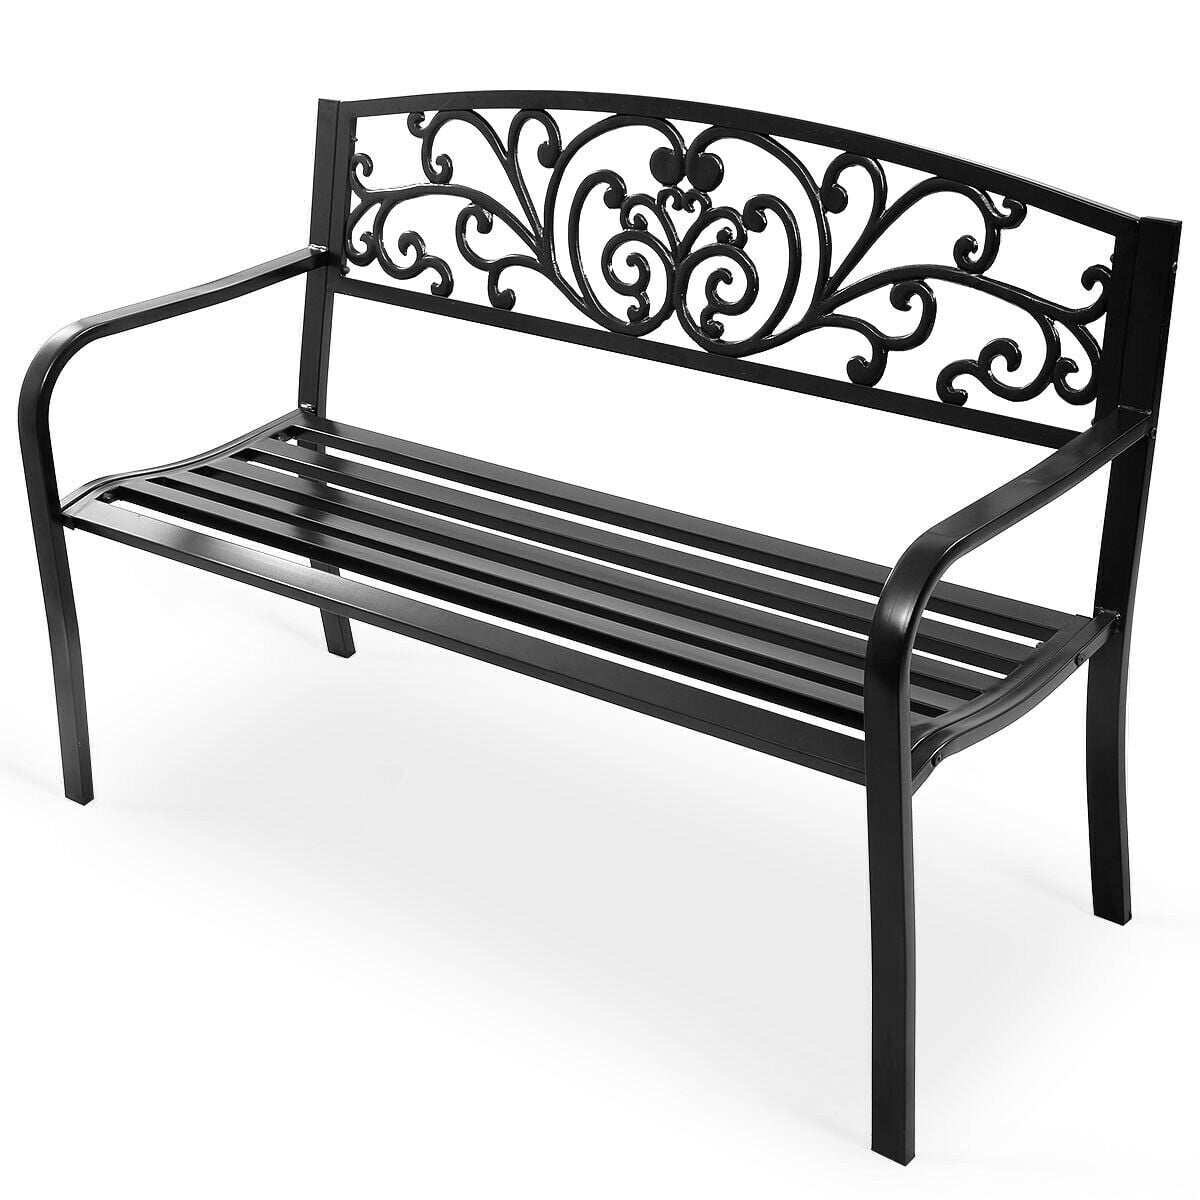 50" Patio Garden Bench Park Yard Outdoor Furniture Steel Slats Porch Chair Seat 